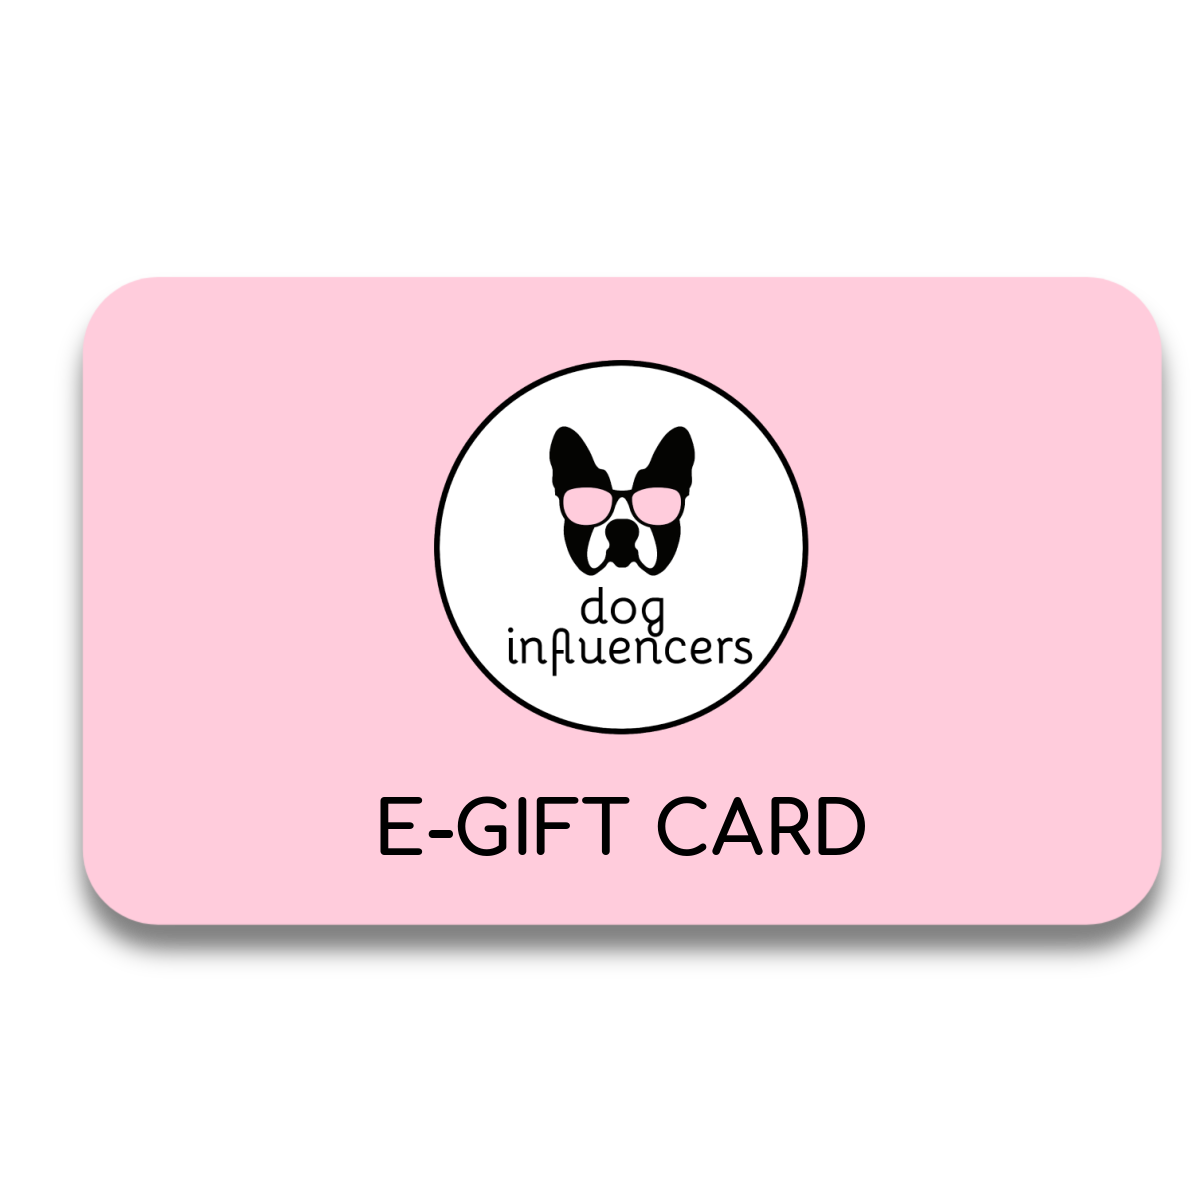 E-Gift Card - Dog Influencers